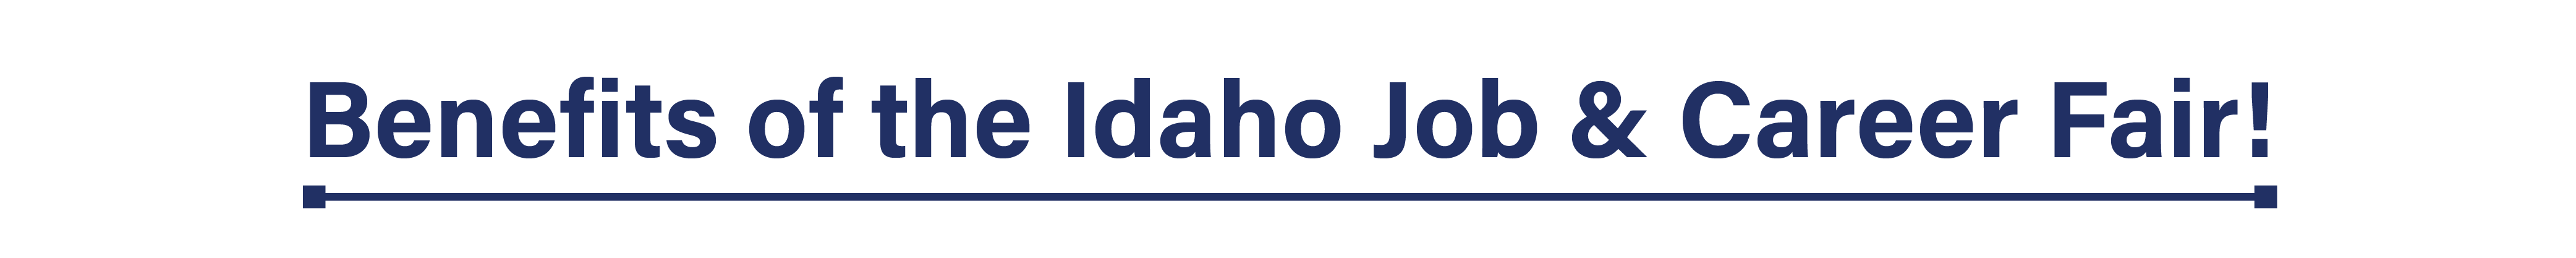 Benefits of the Idaho Job & Career Fair